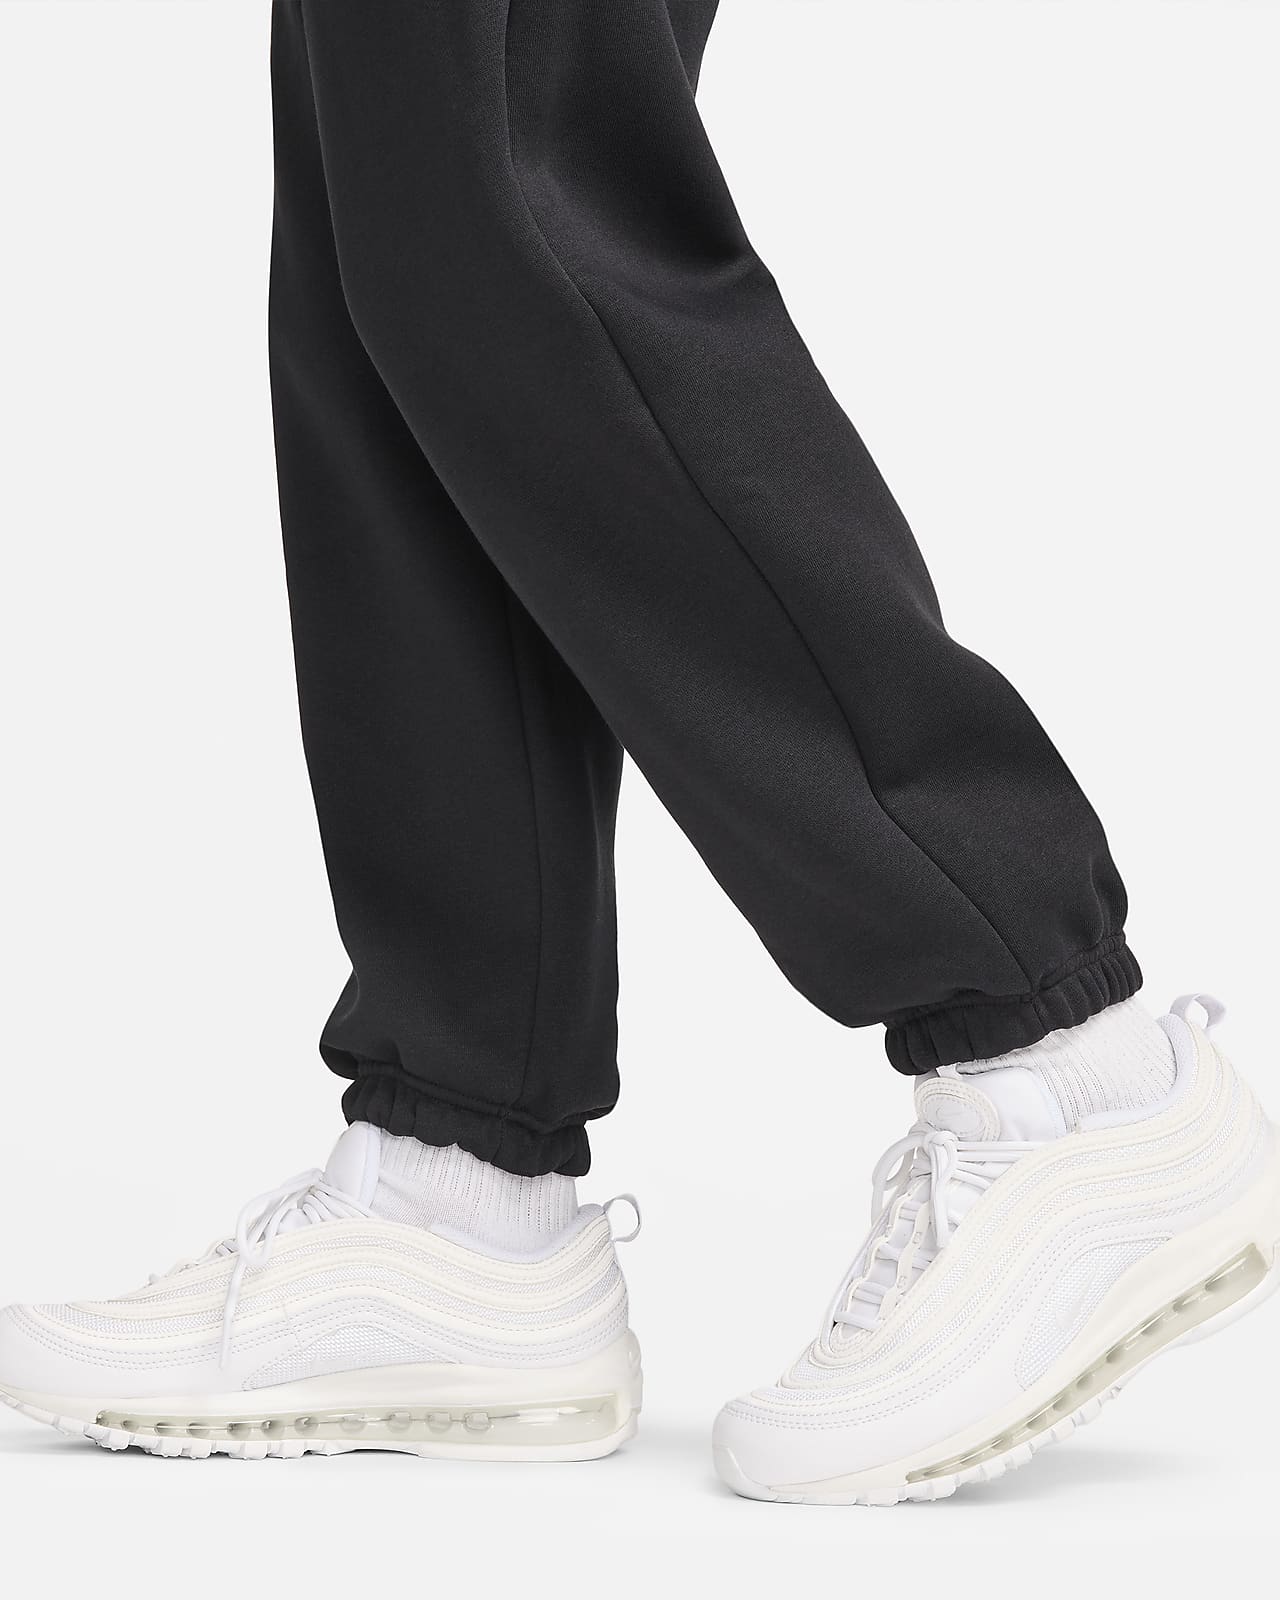 Nike Sportswear Phoenix Fleece Women's High-Waisted Oversized French Terry  Tracksuit Bottoms. Nike ID